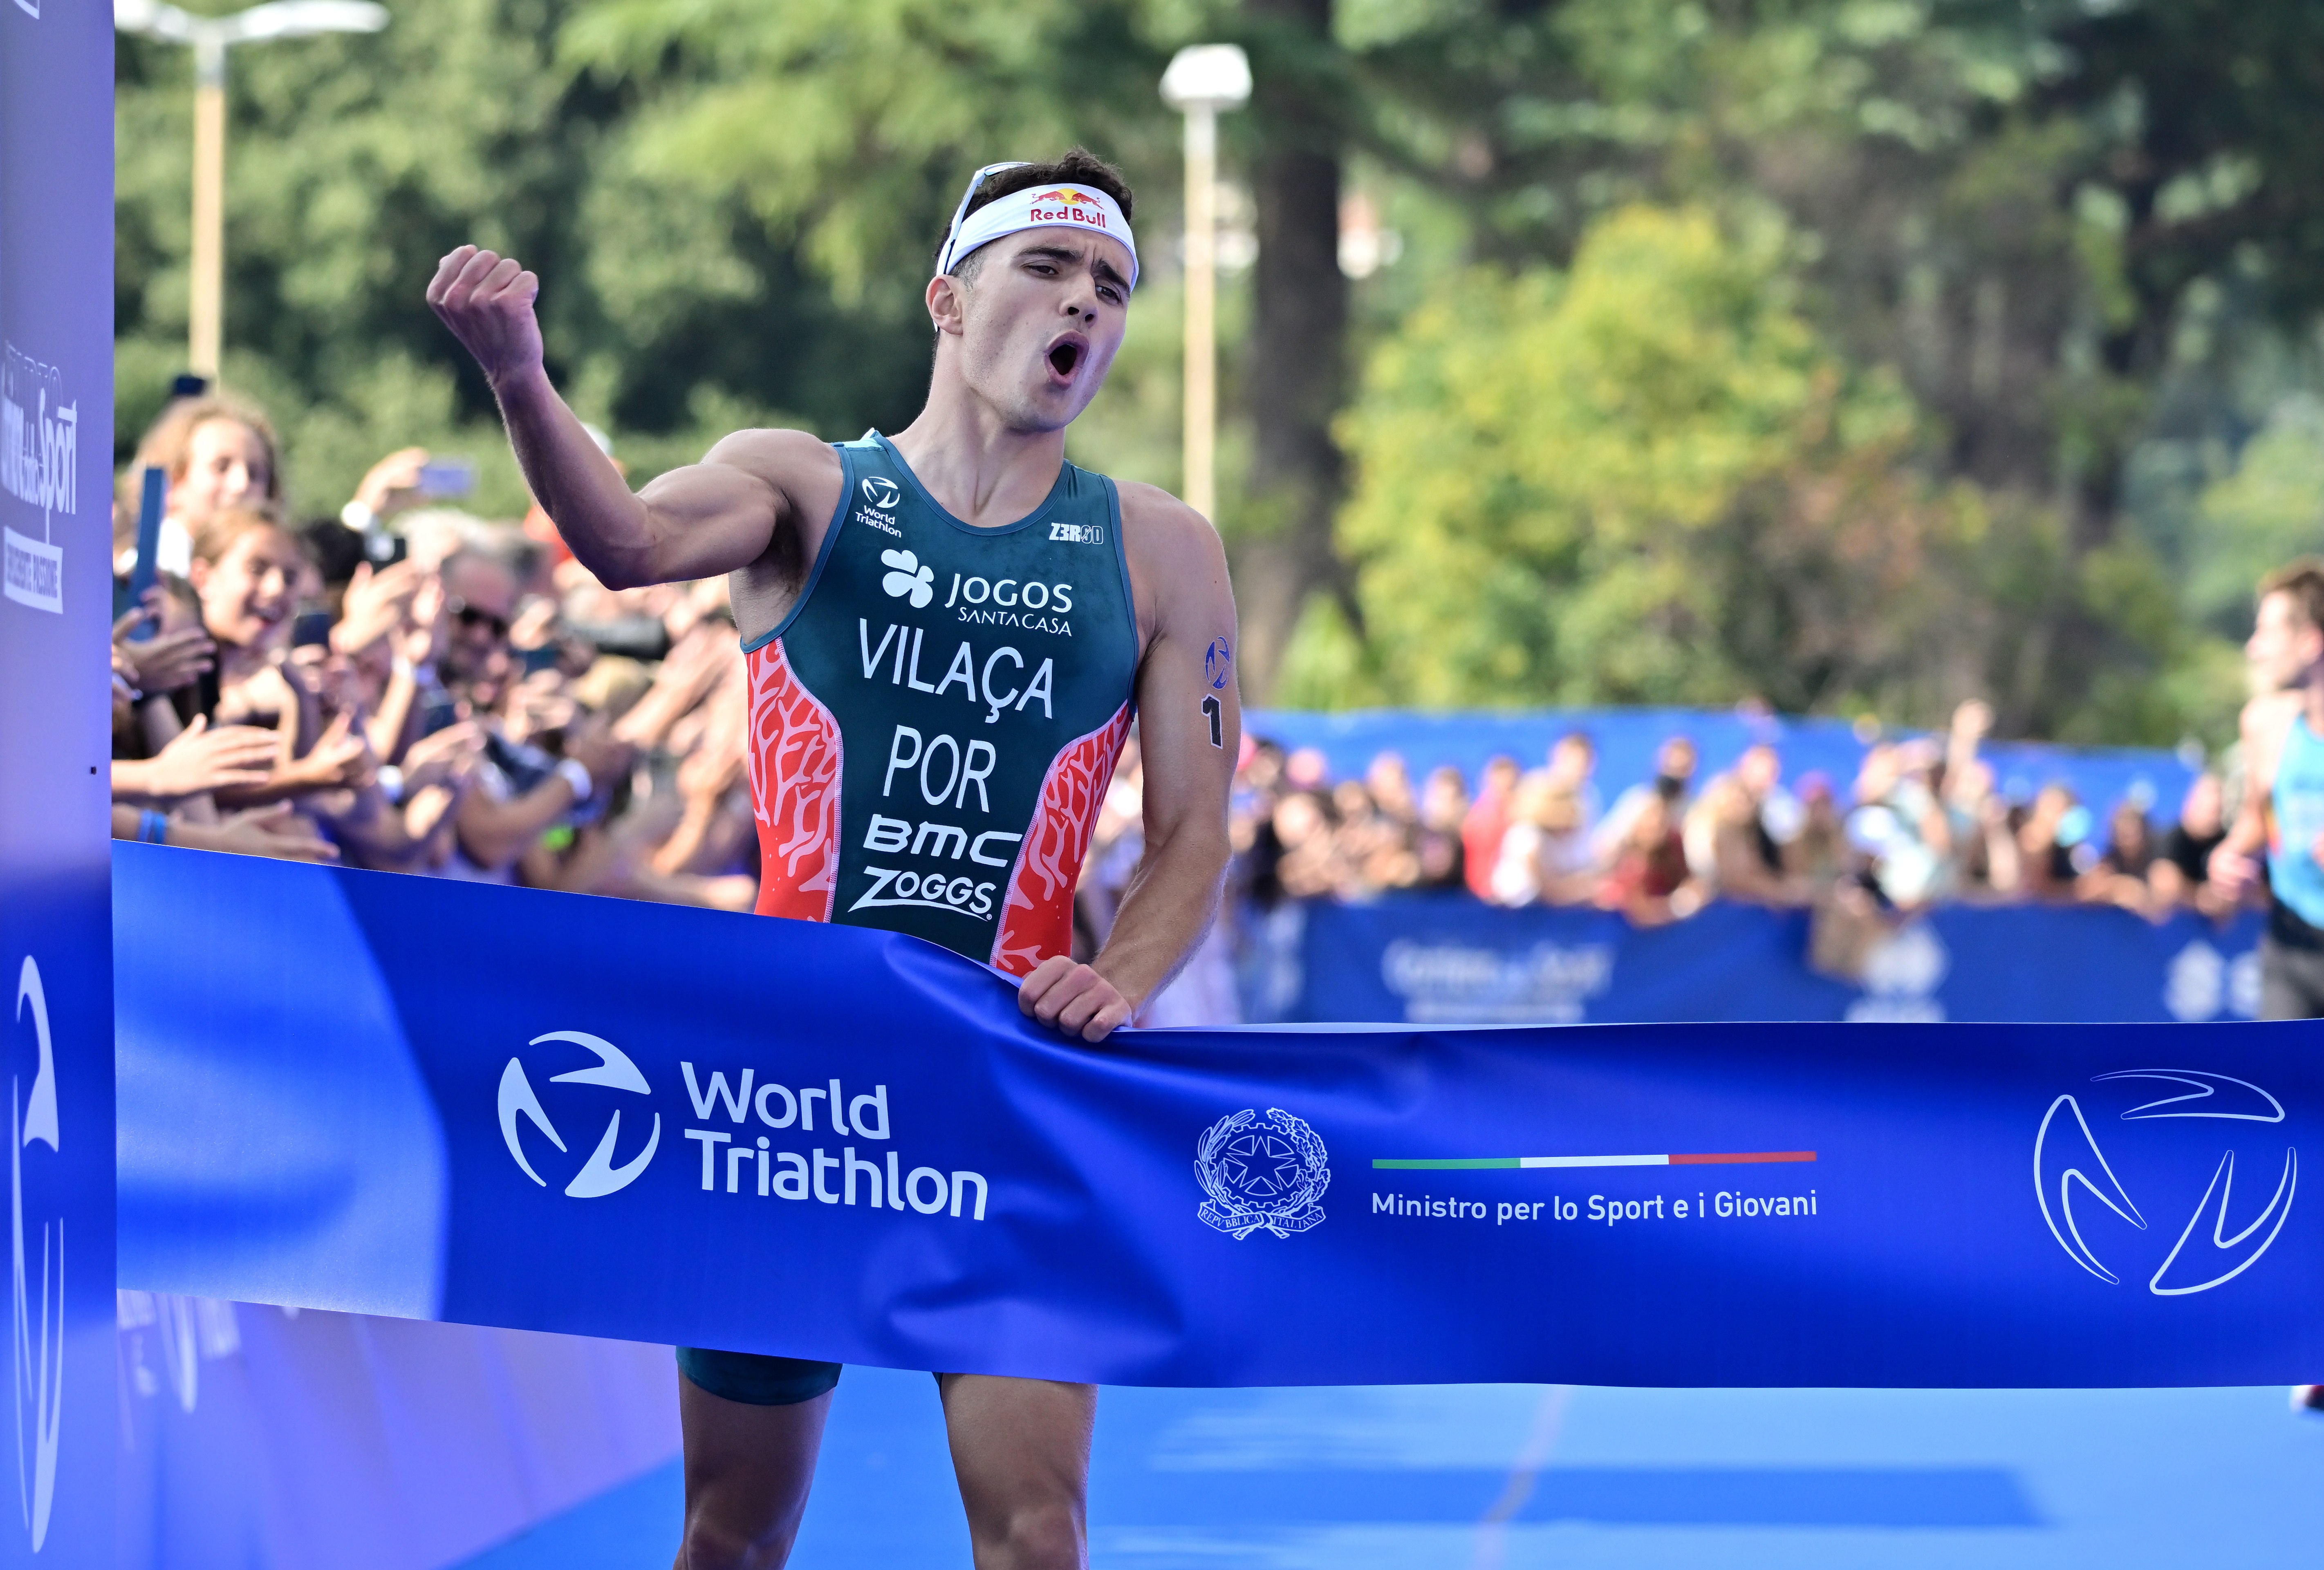 Vasco Vilaca soars to debut World Triathlon Cup gold in Rome • World Triathlon